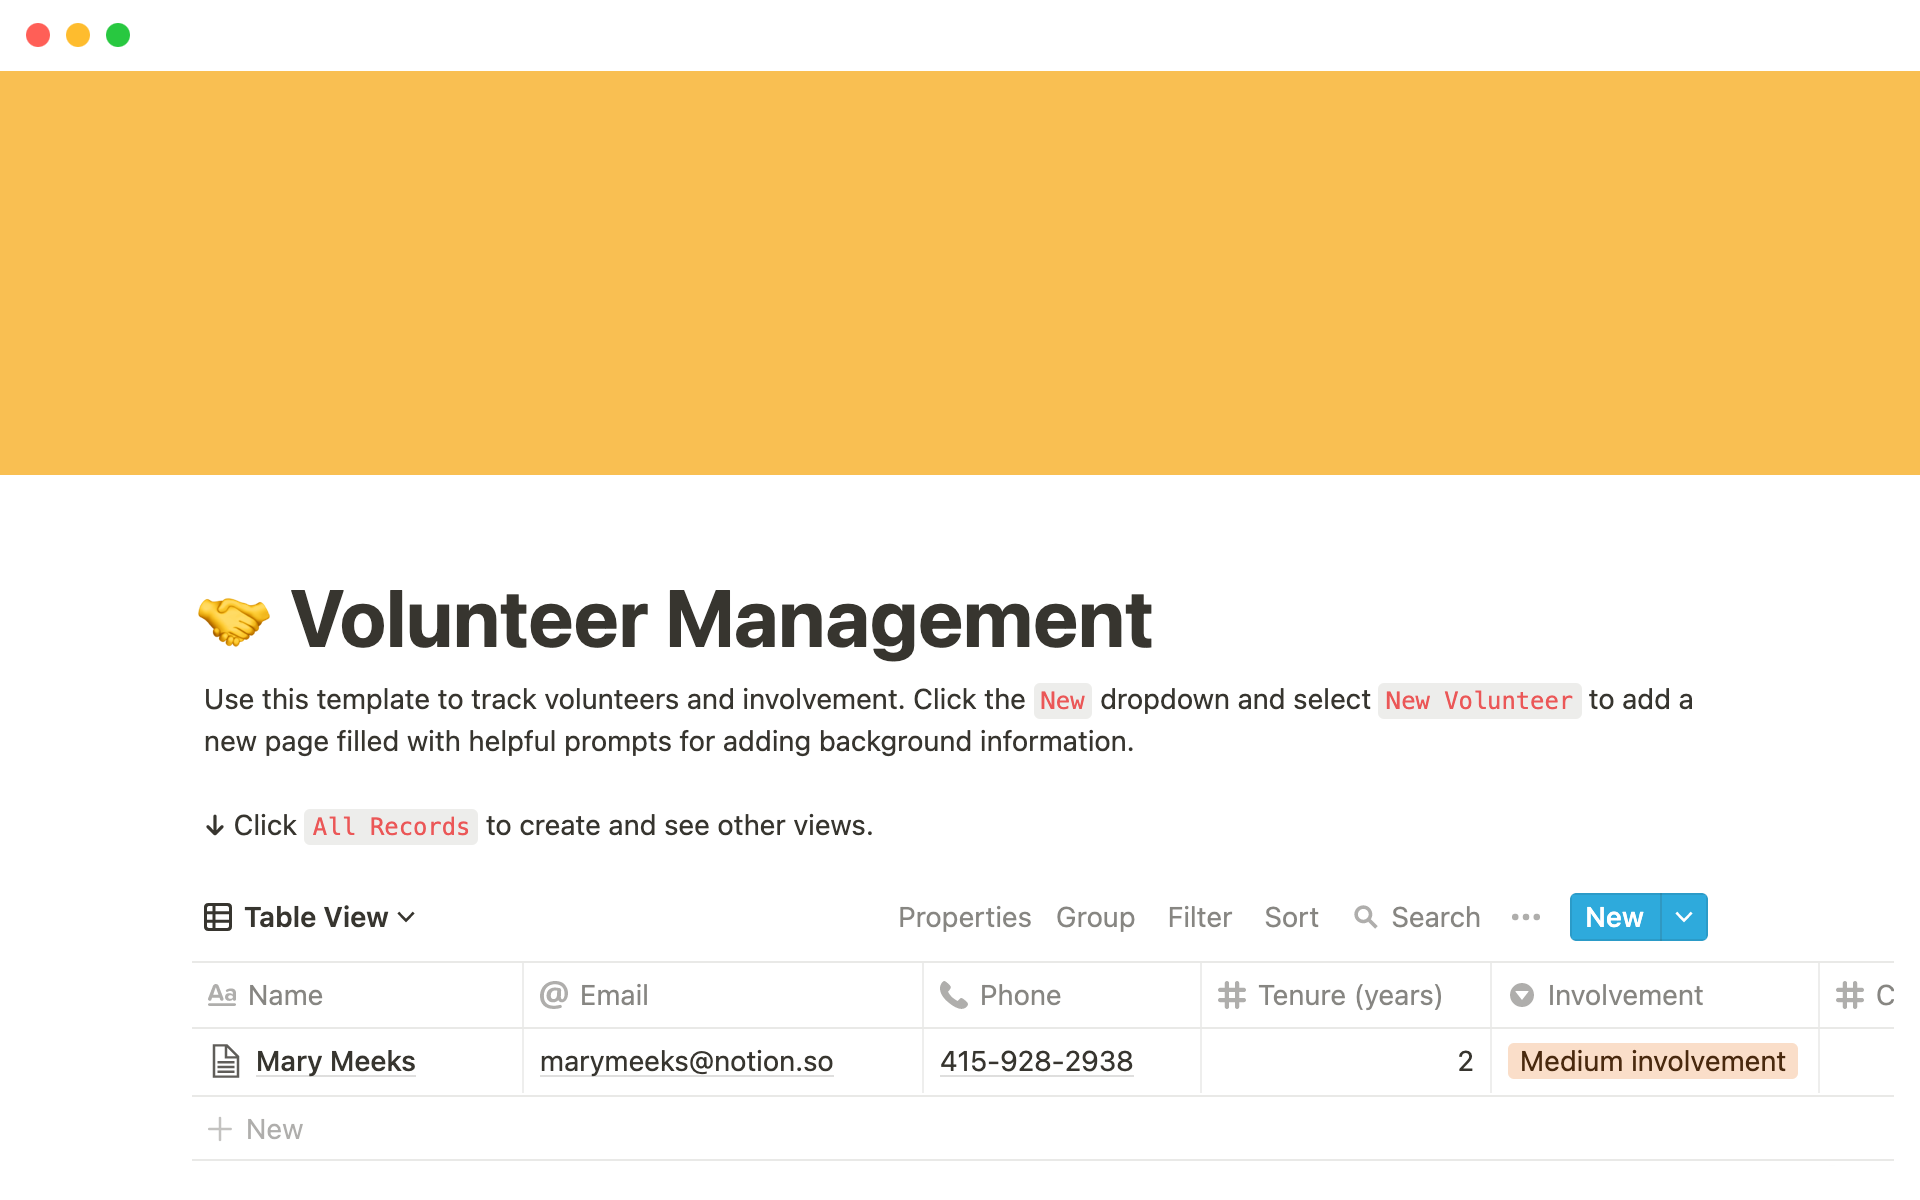 The desktop image for the volunteer management template